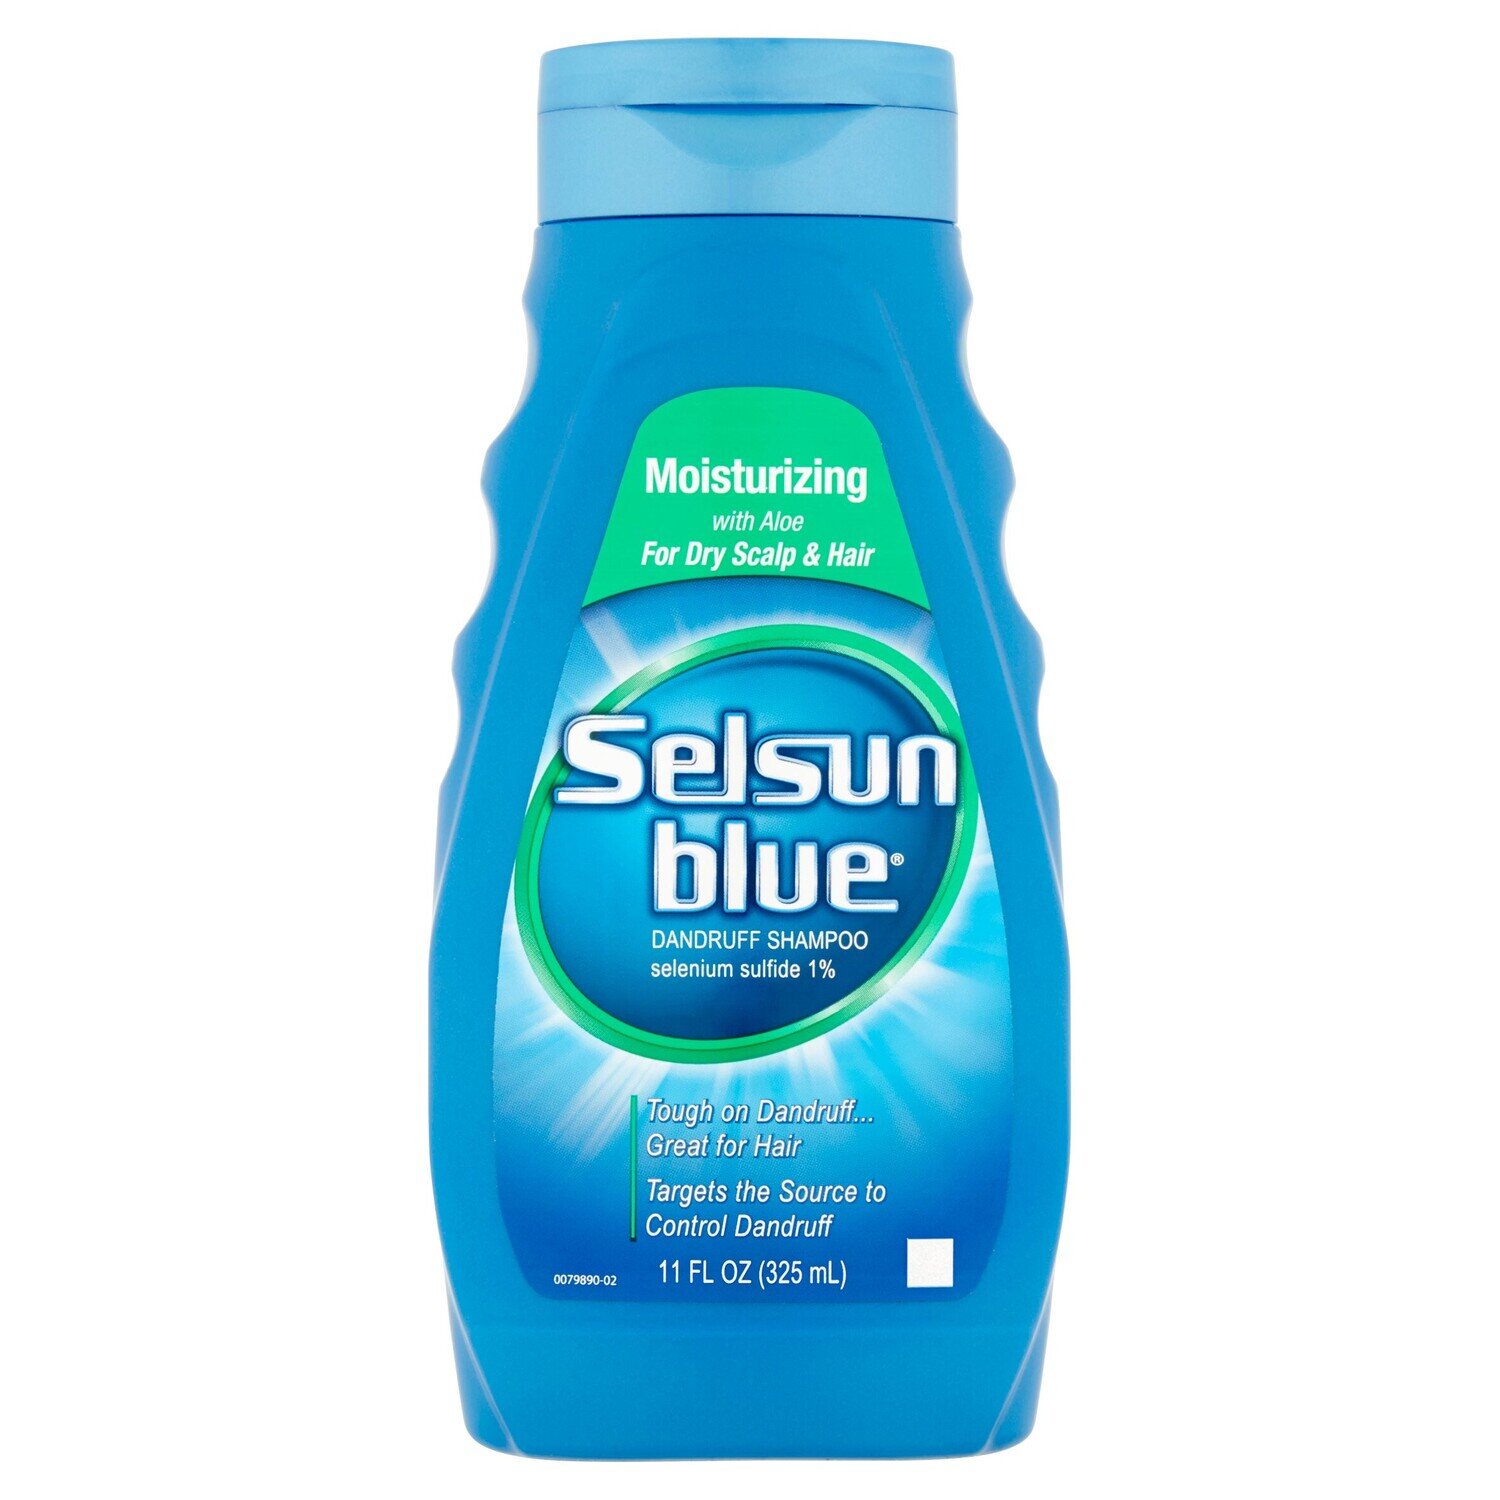 Selsun Blue Maximum Strength Antidandruff Shampoo Moisturizing